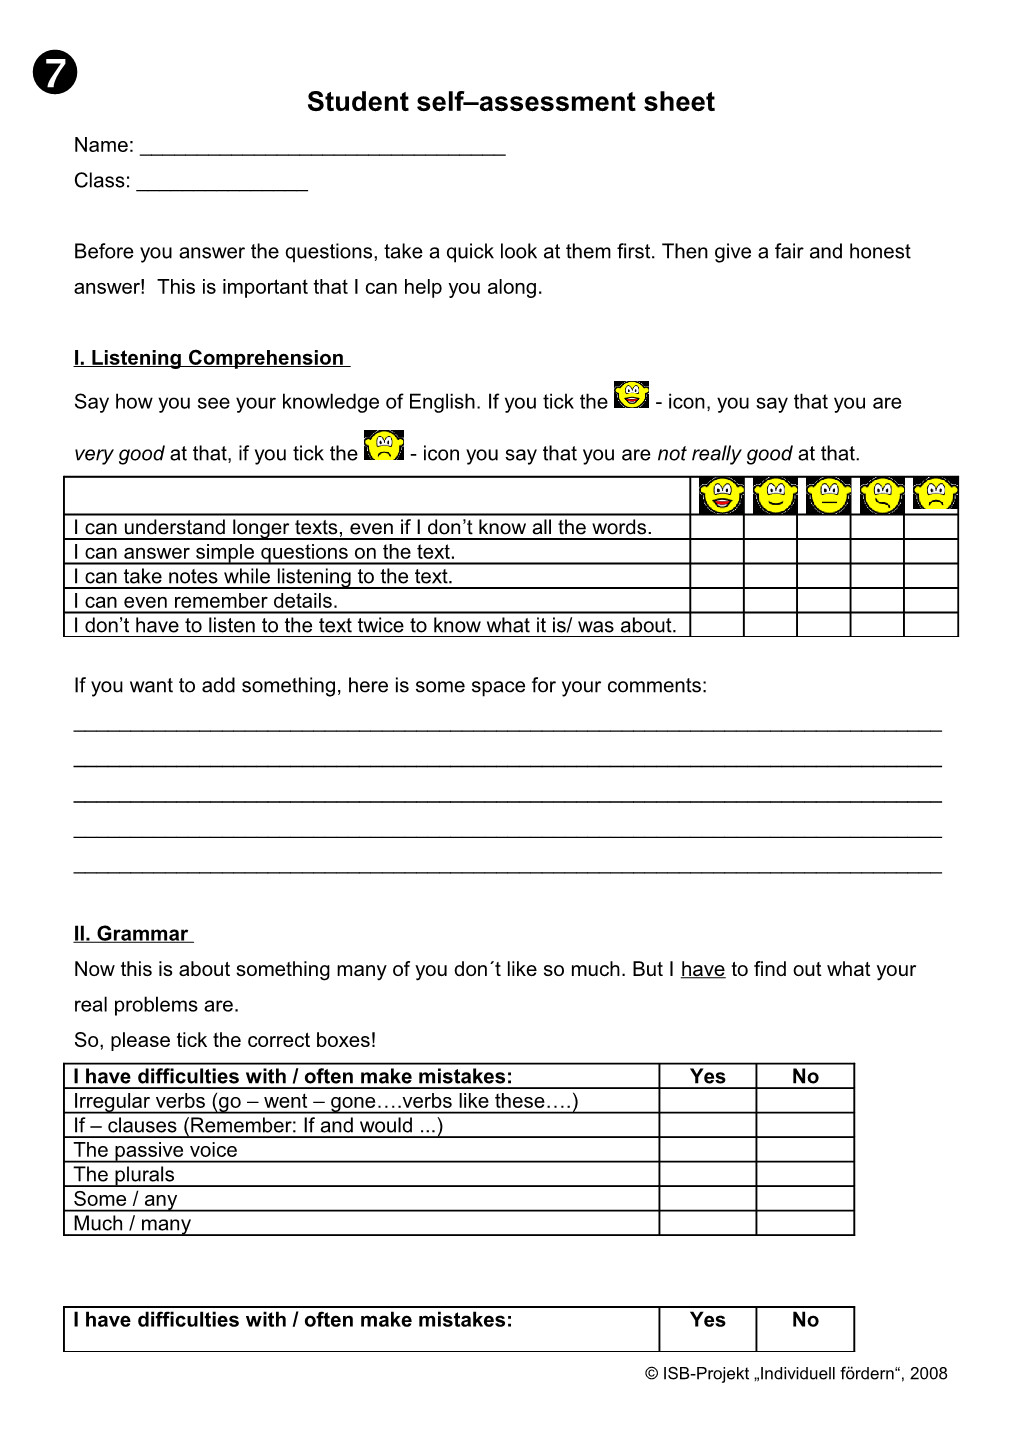 Student Self Assessment Sheet